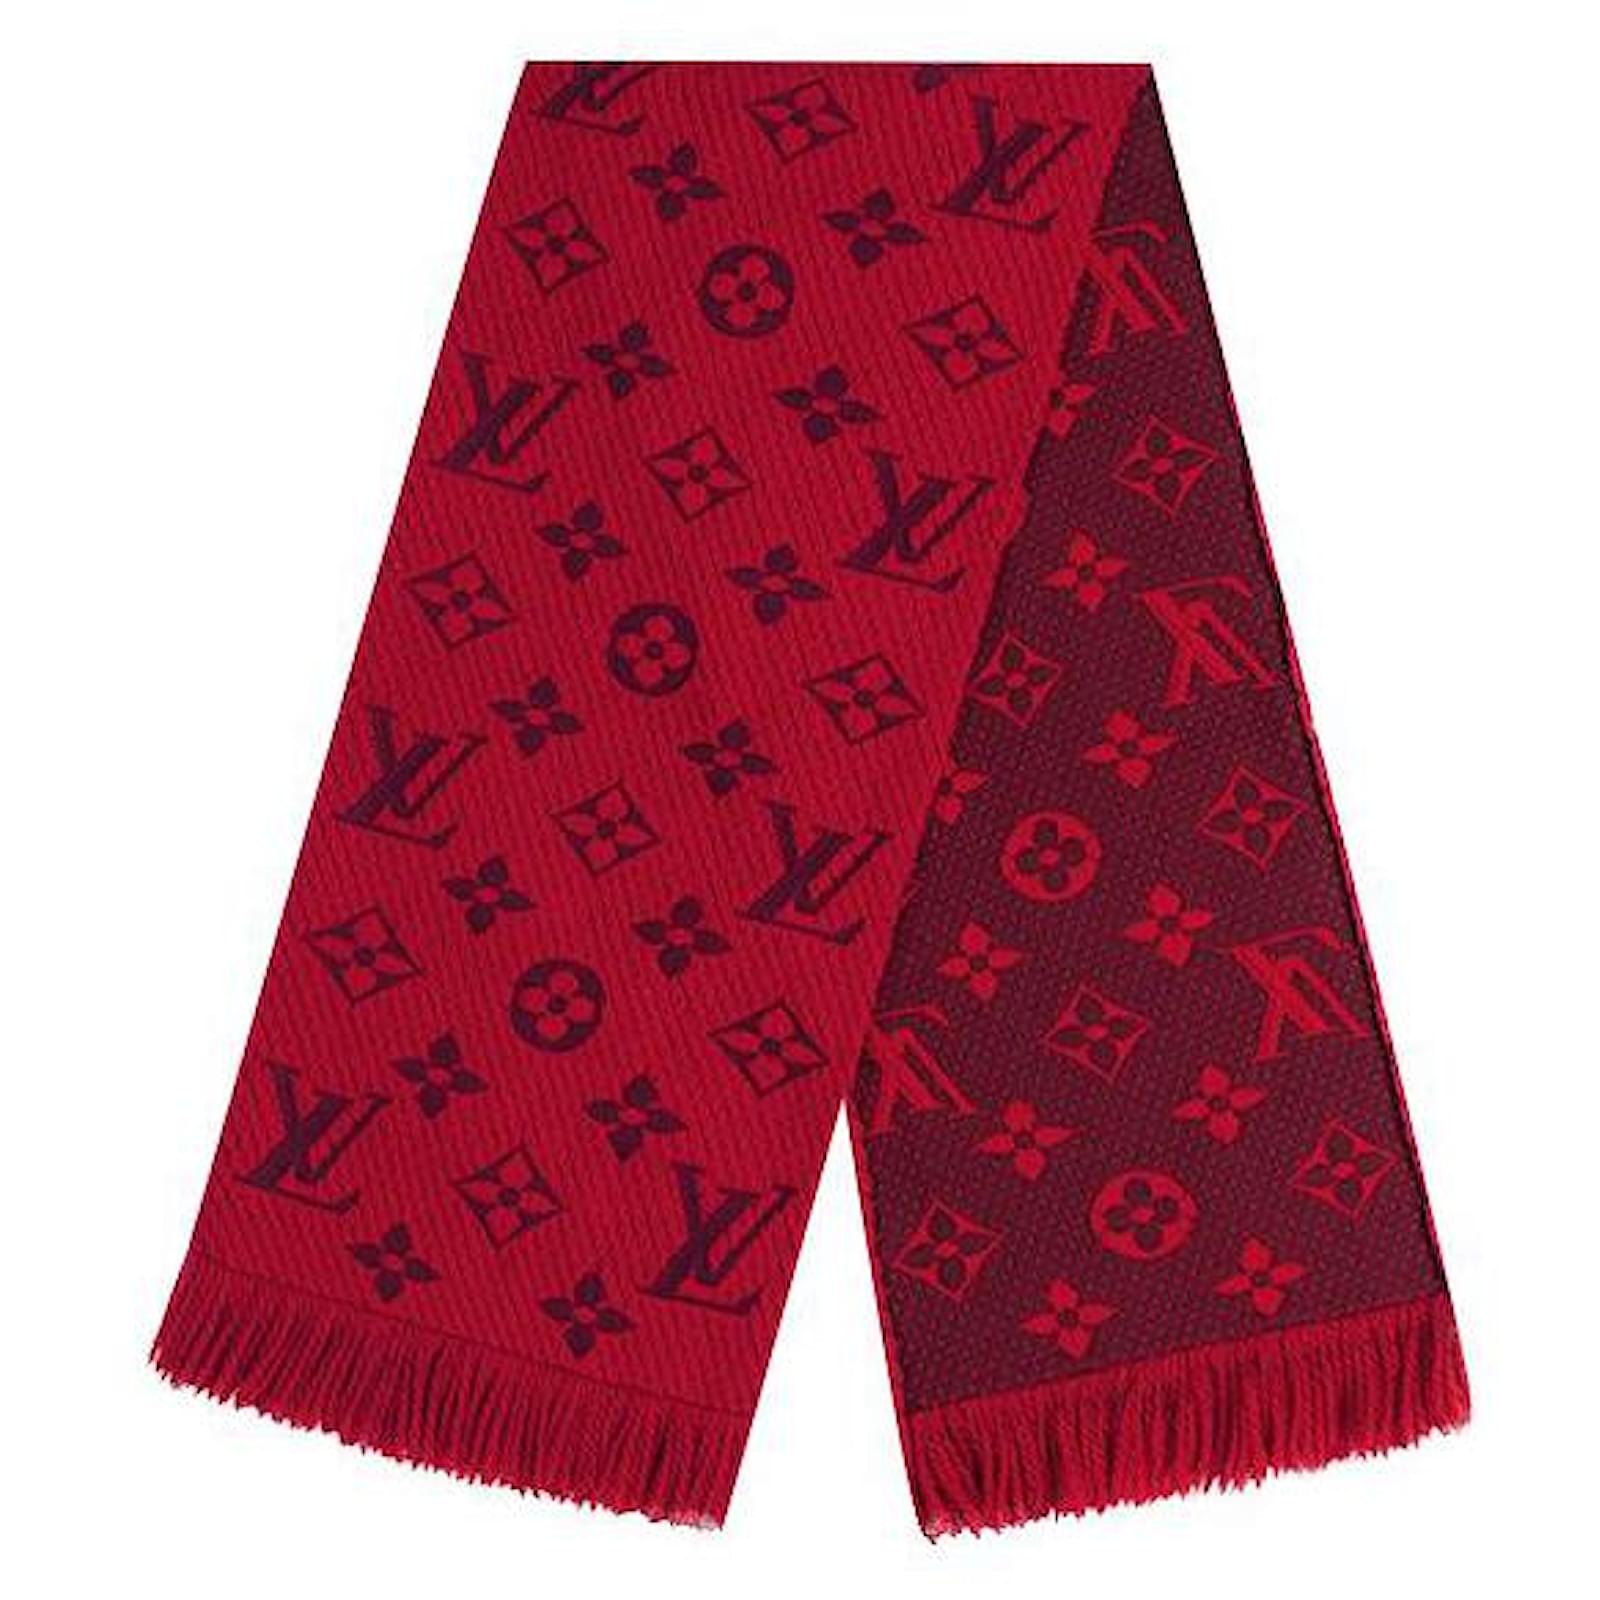 vuitton logomania scarf red